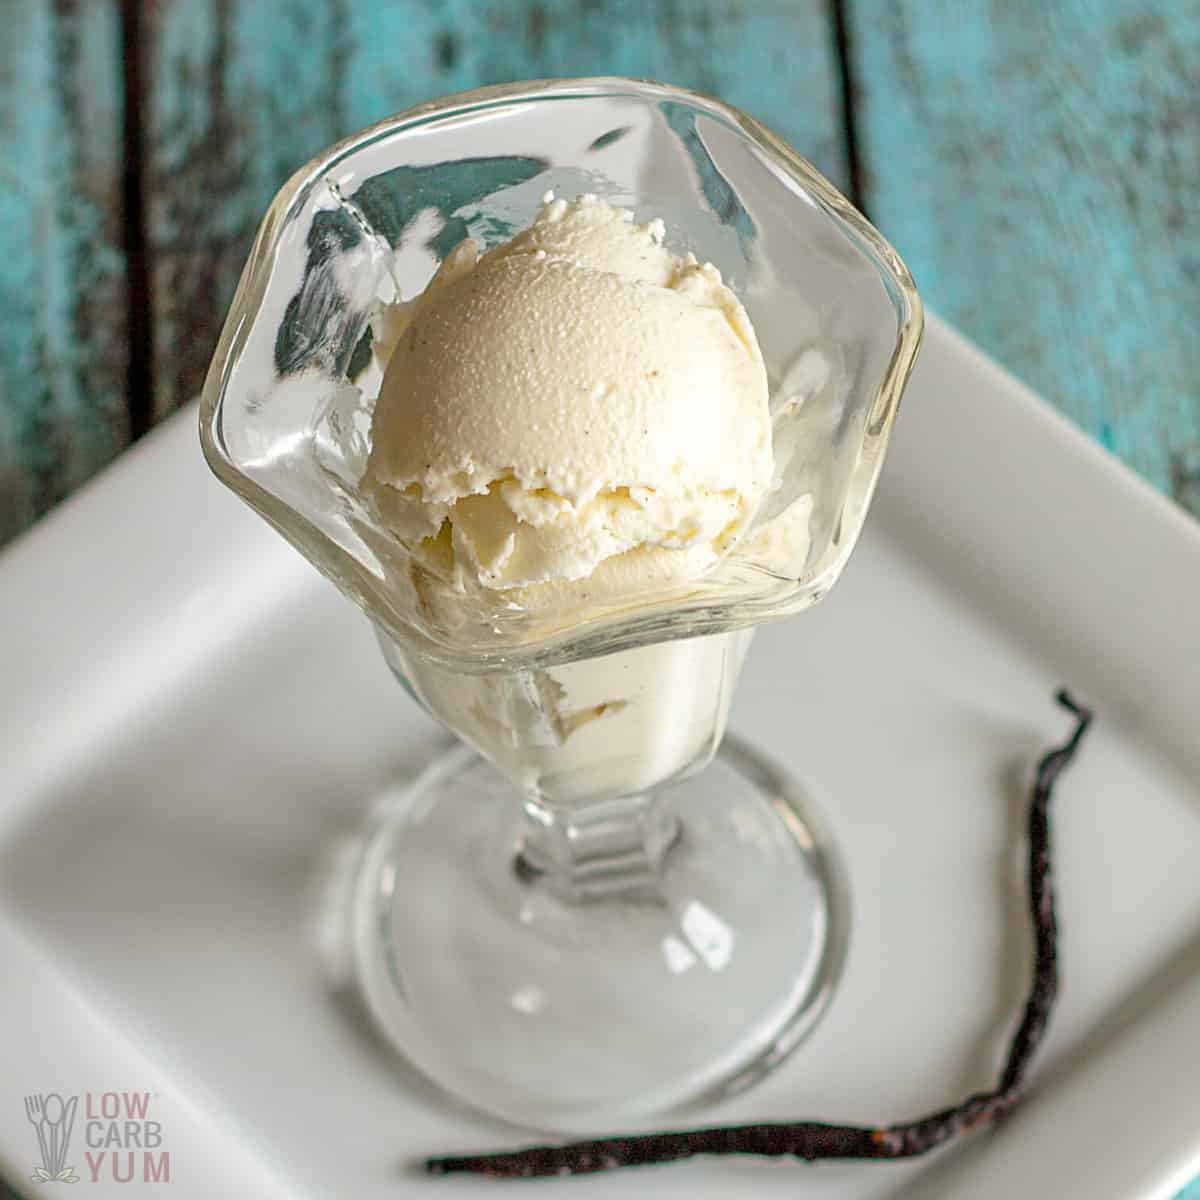 dessert dish with sugar free vanilla ice cream in it.